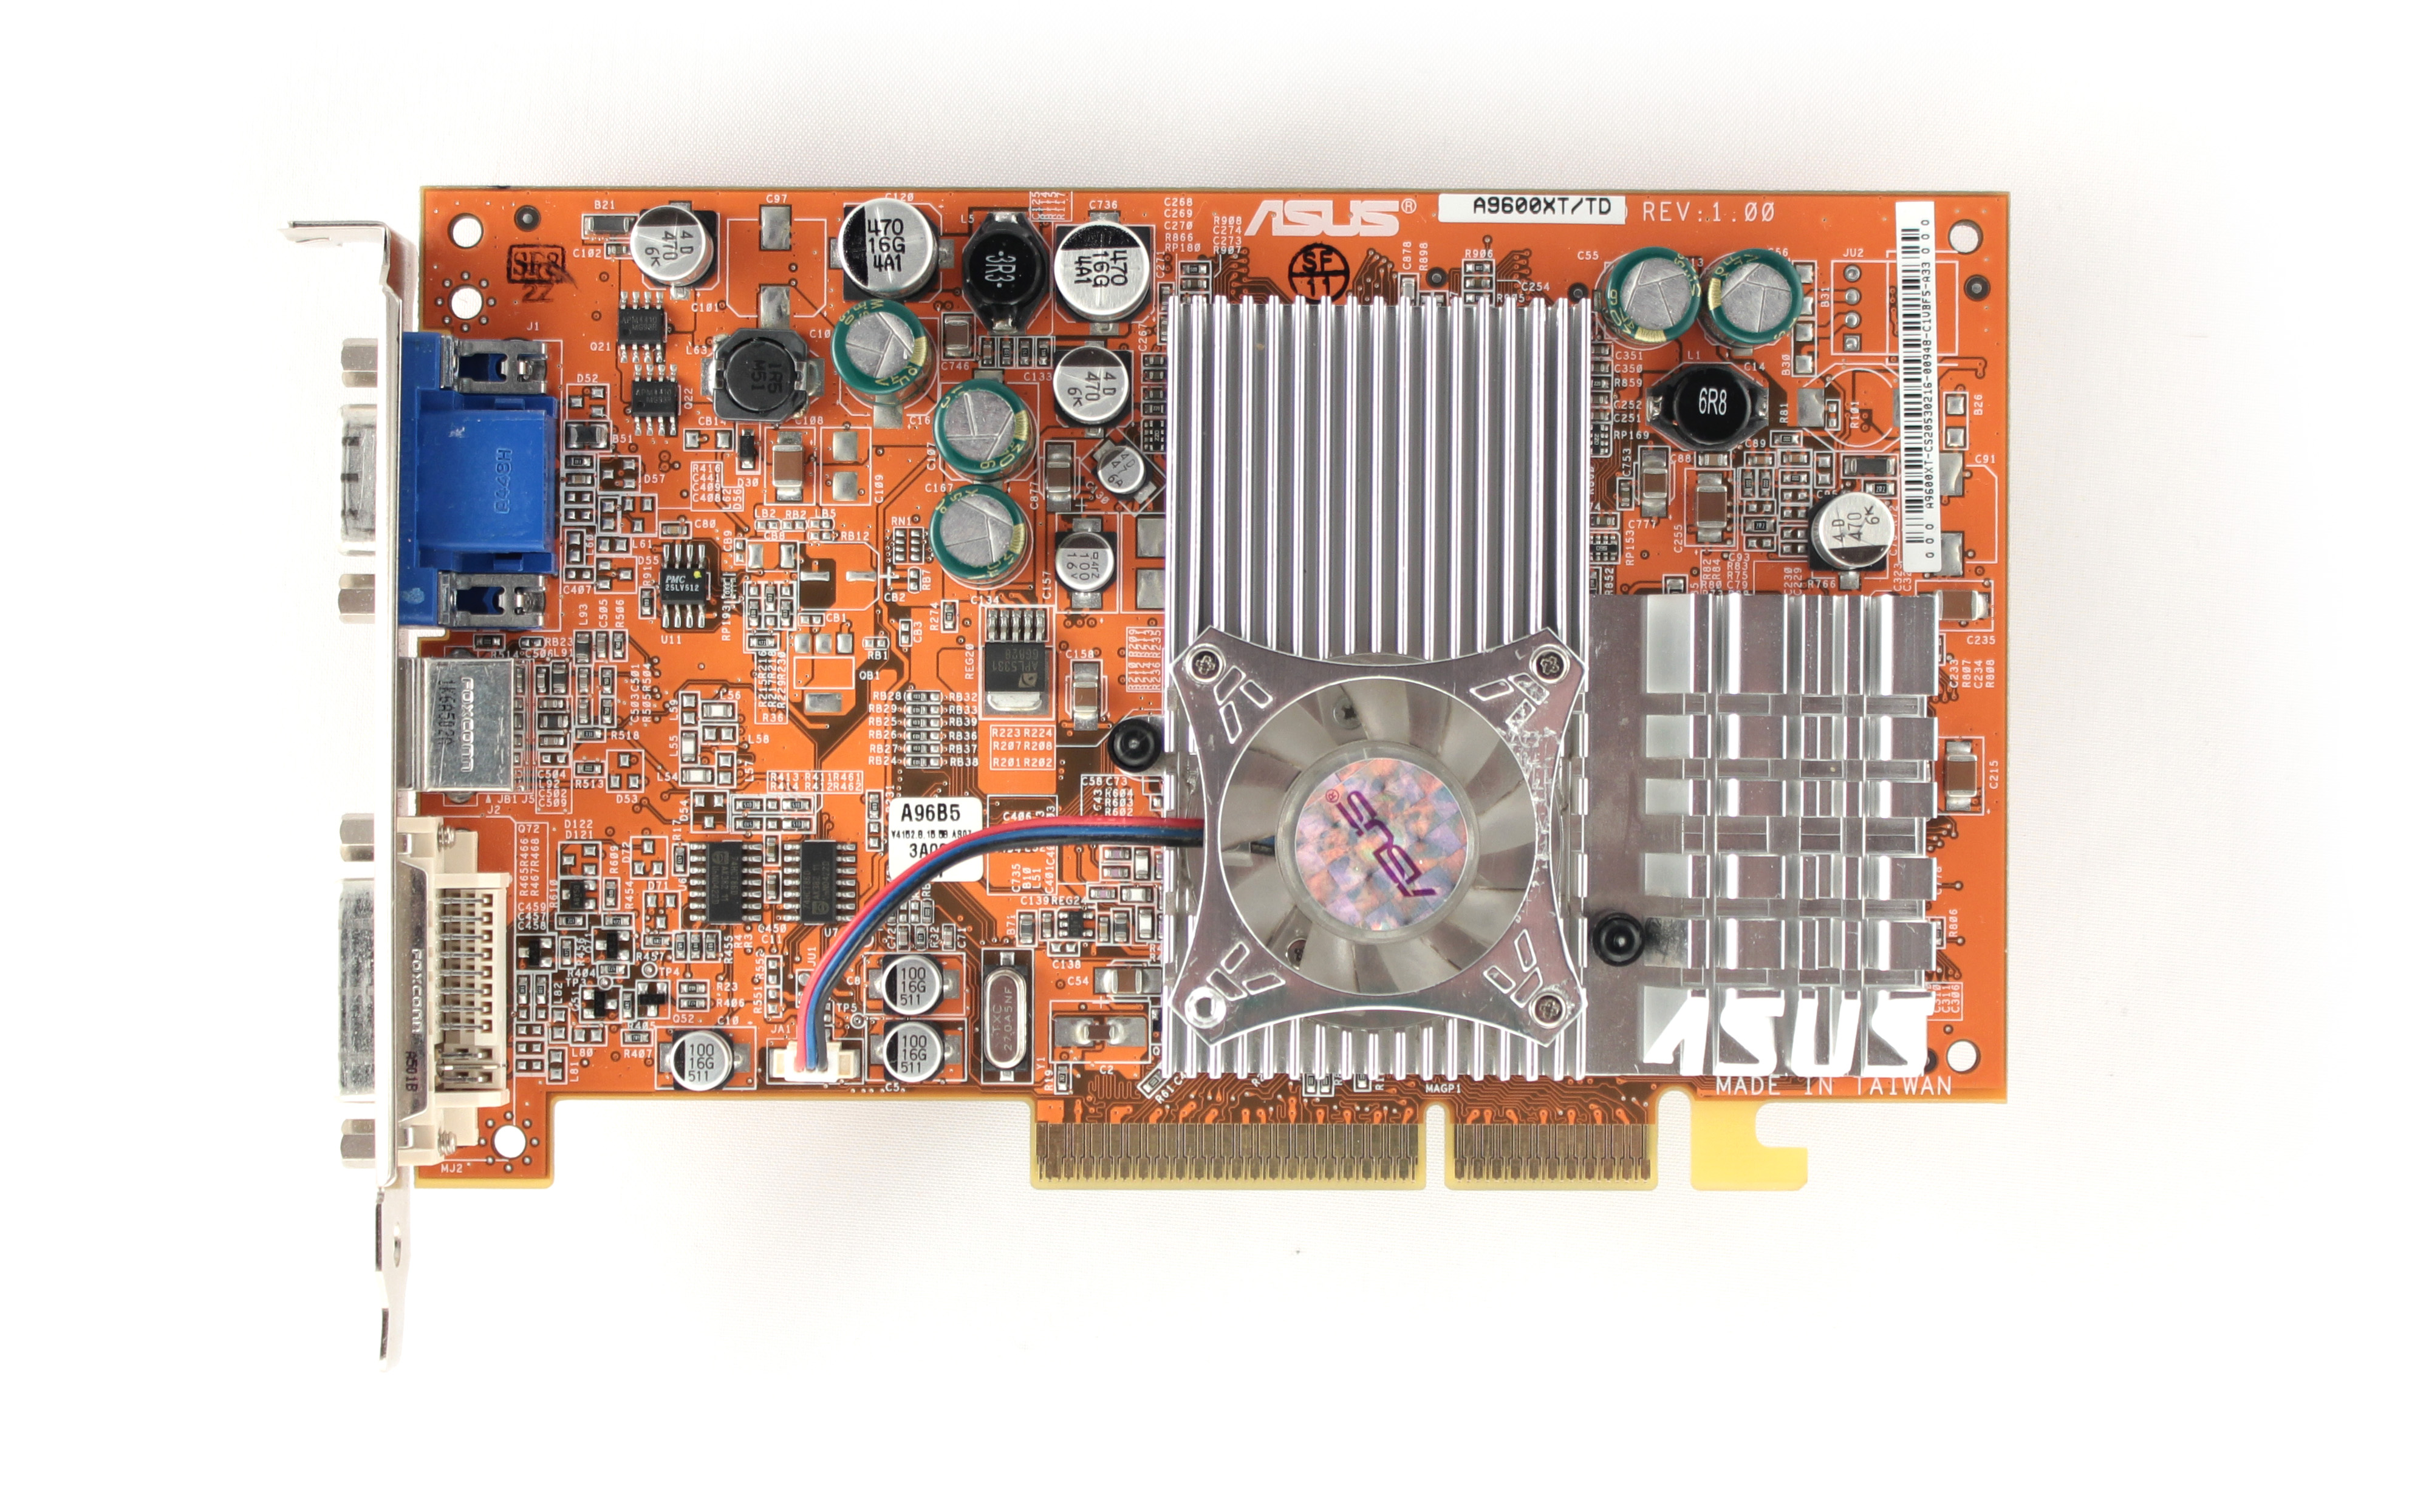 Videocard virtual museum ASUS A9600XT/TD (ATI Radeon 